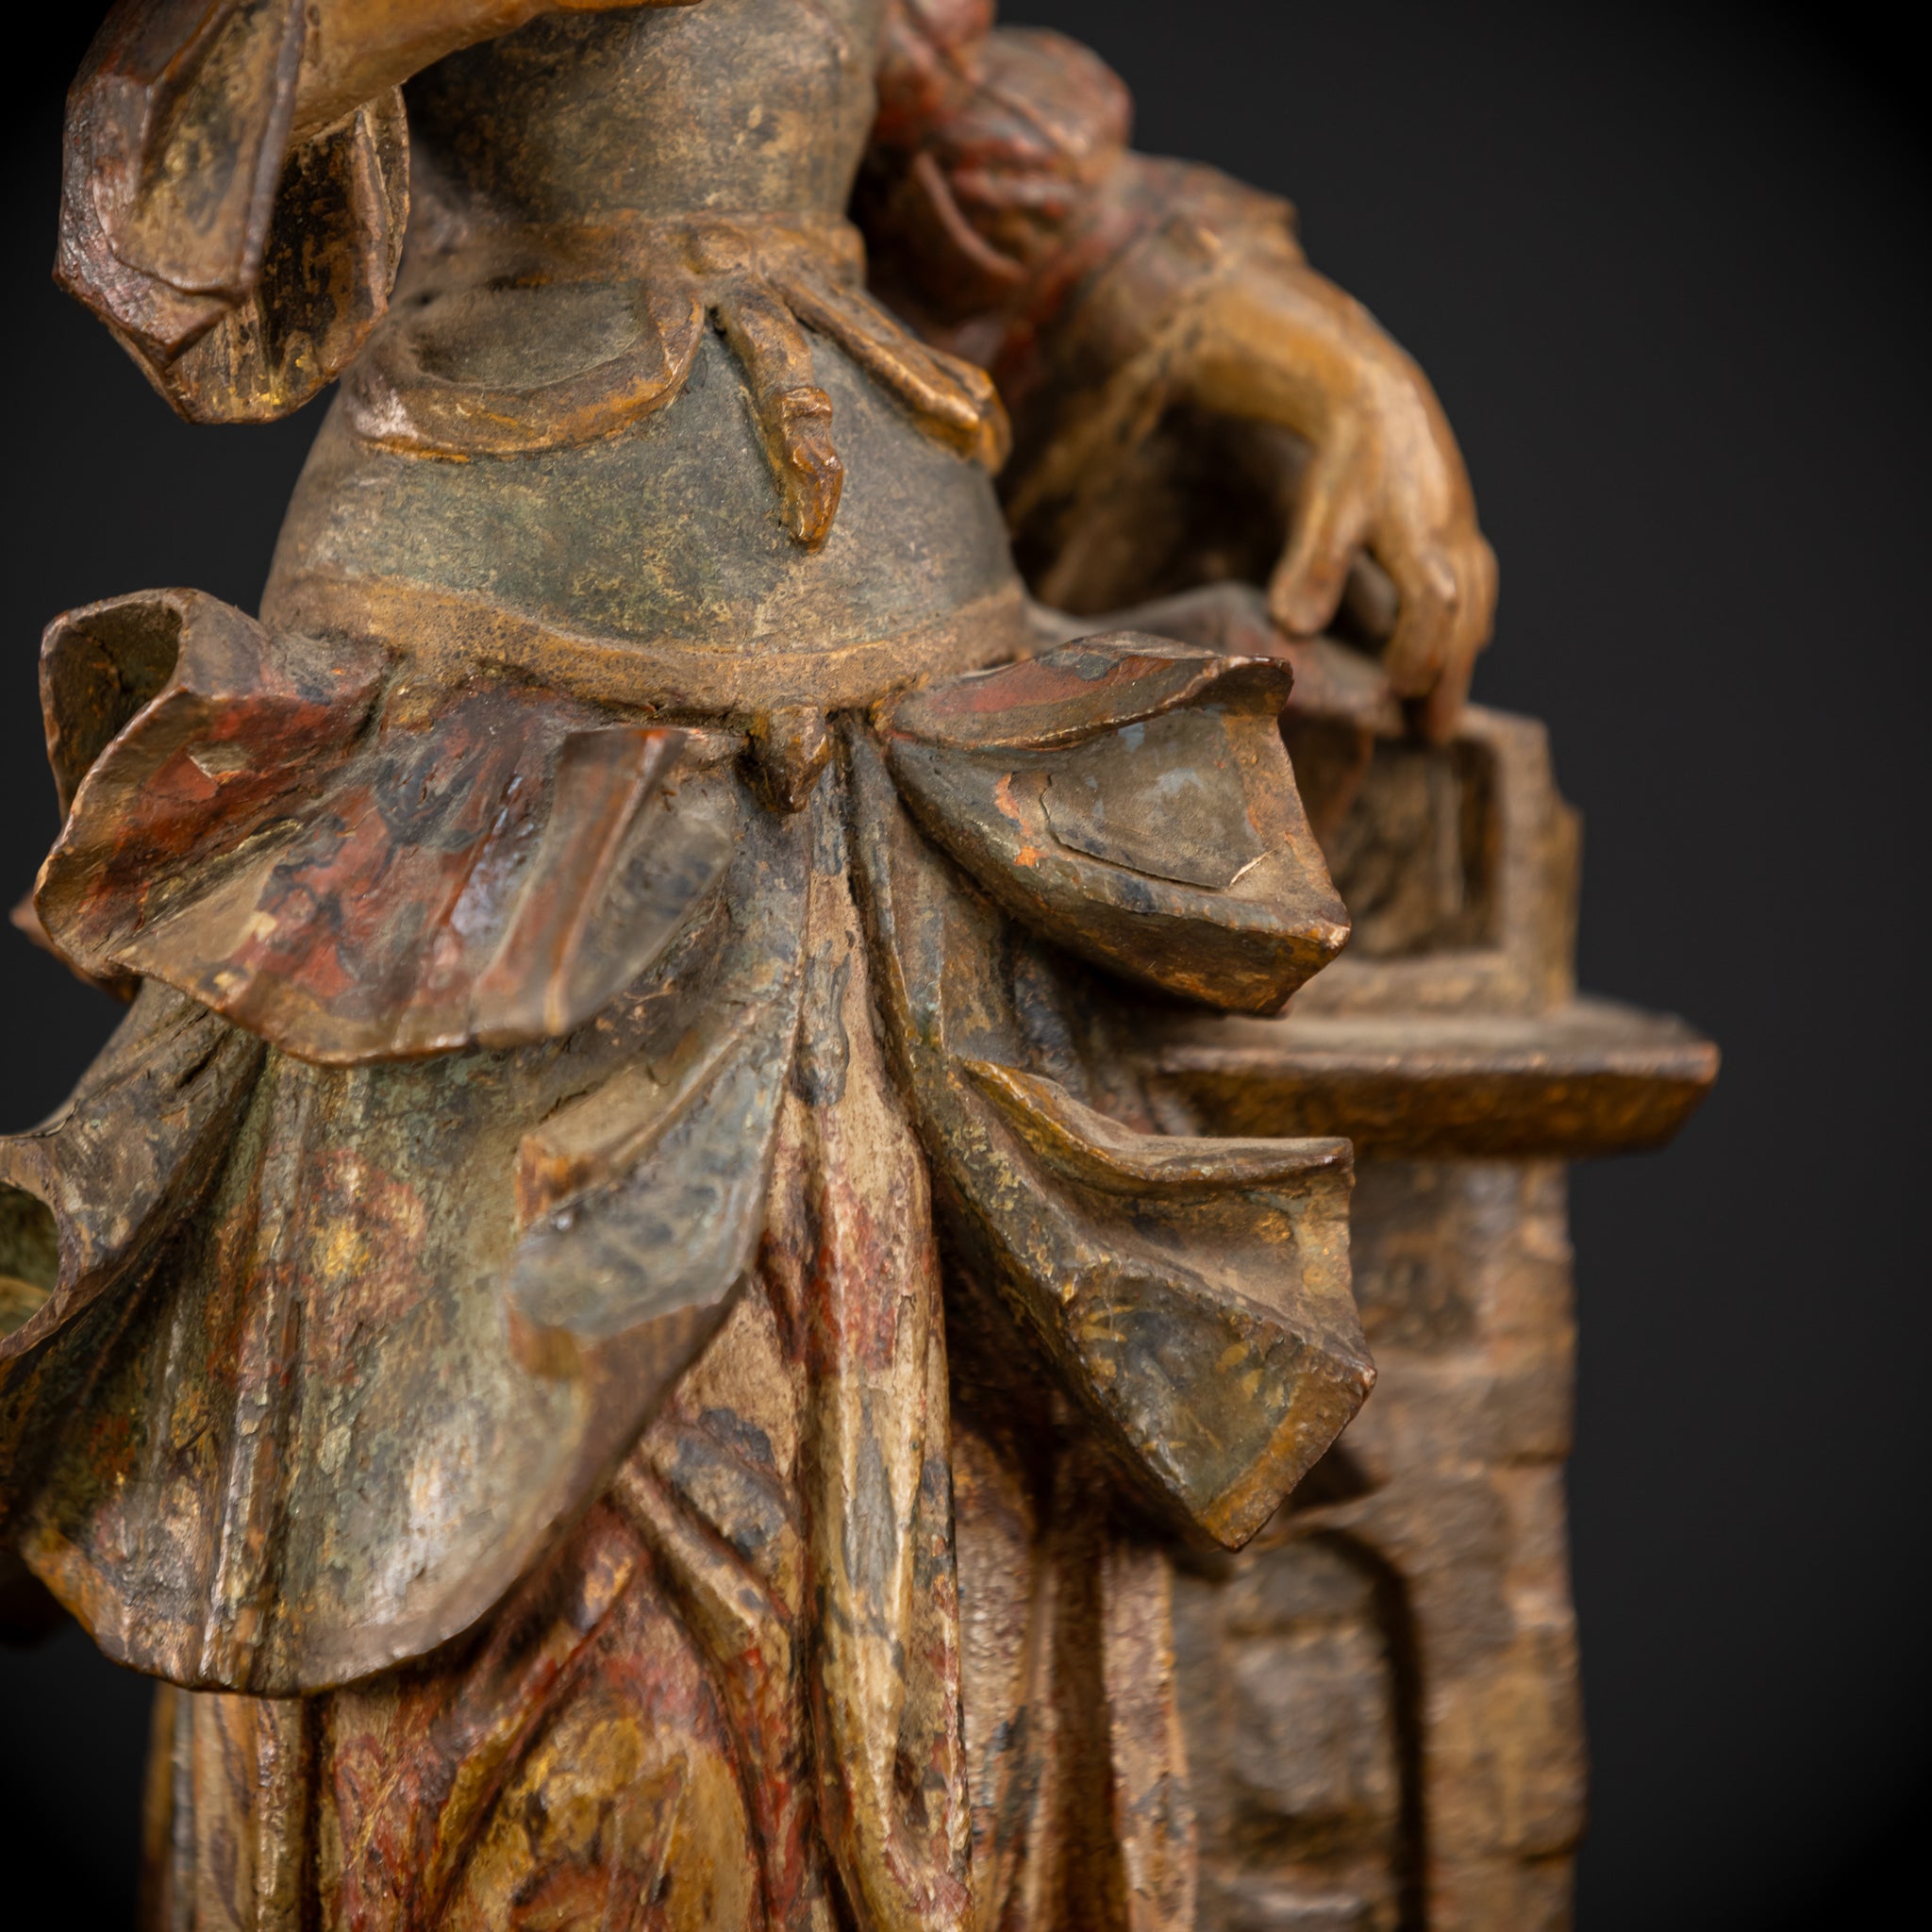 St Barbara Wood Carving Statue | 1700s Antique | 12.6" / 32 cm